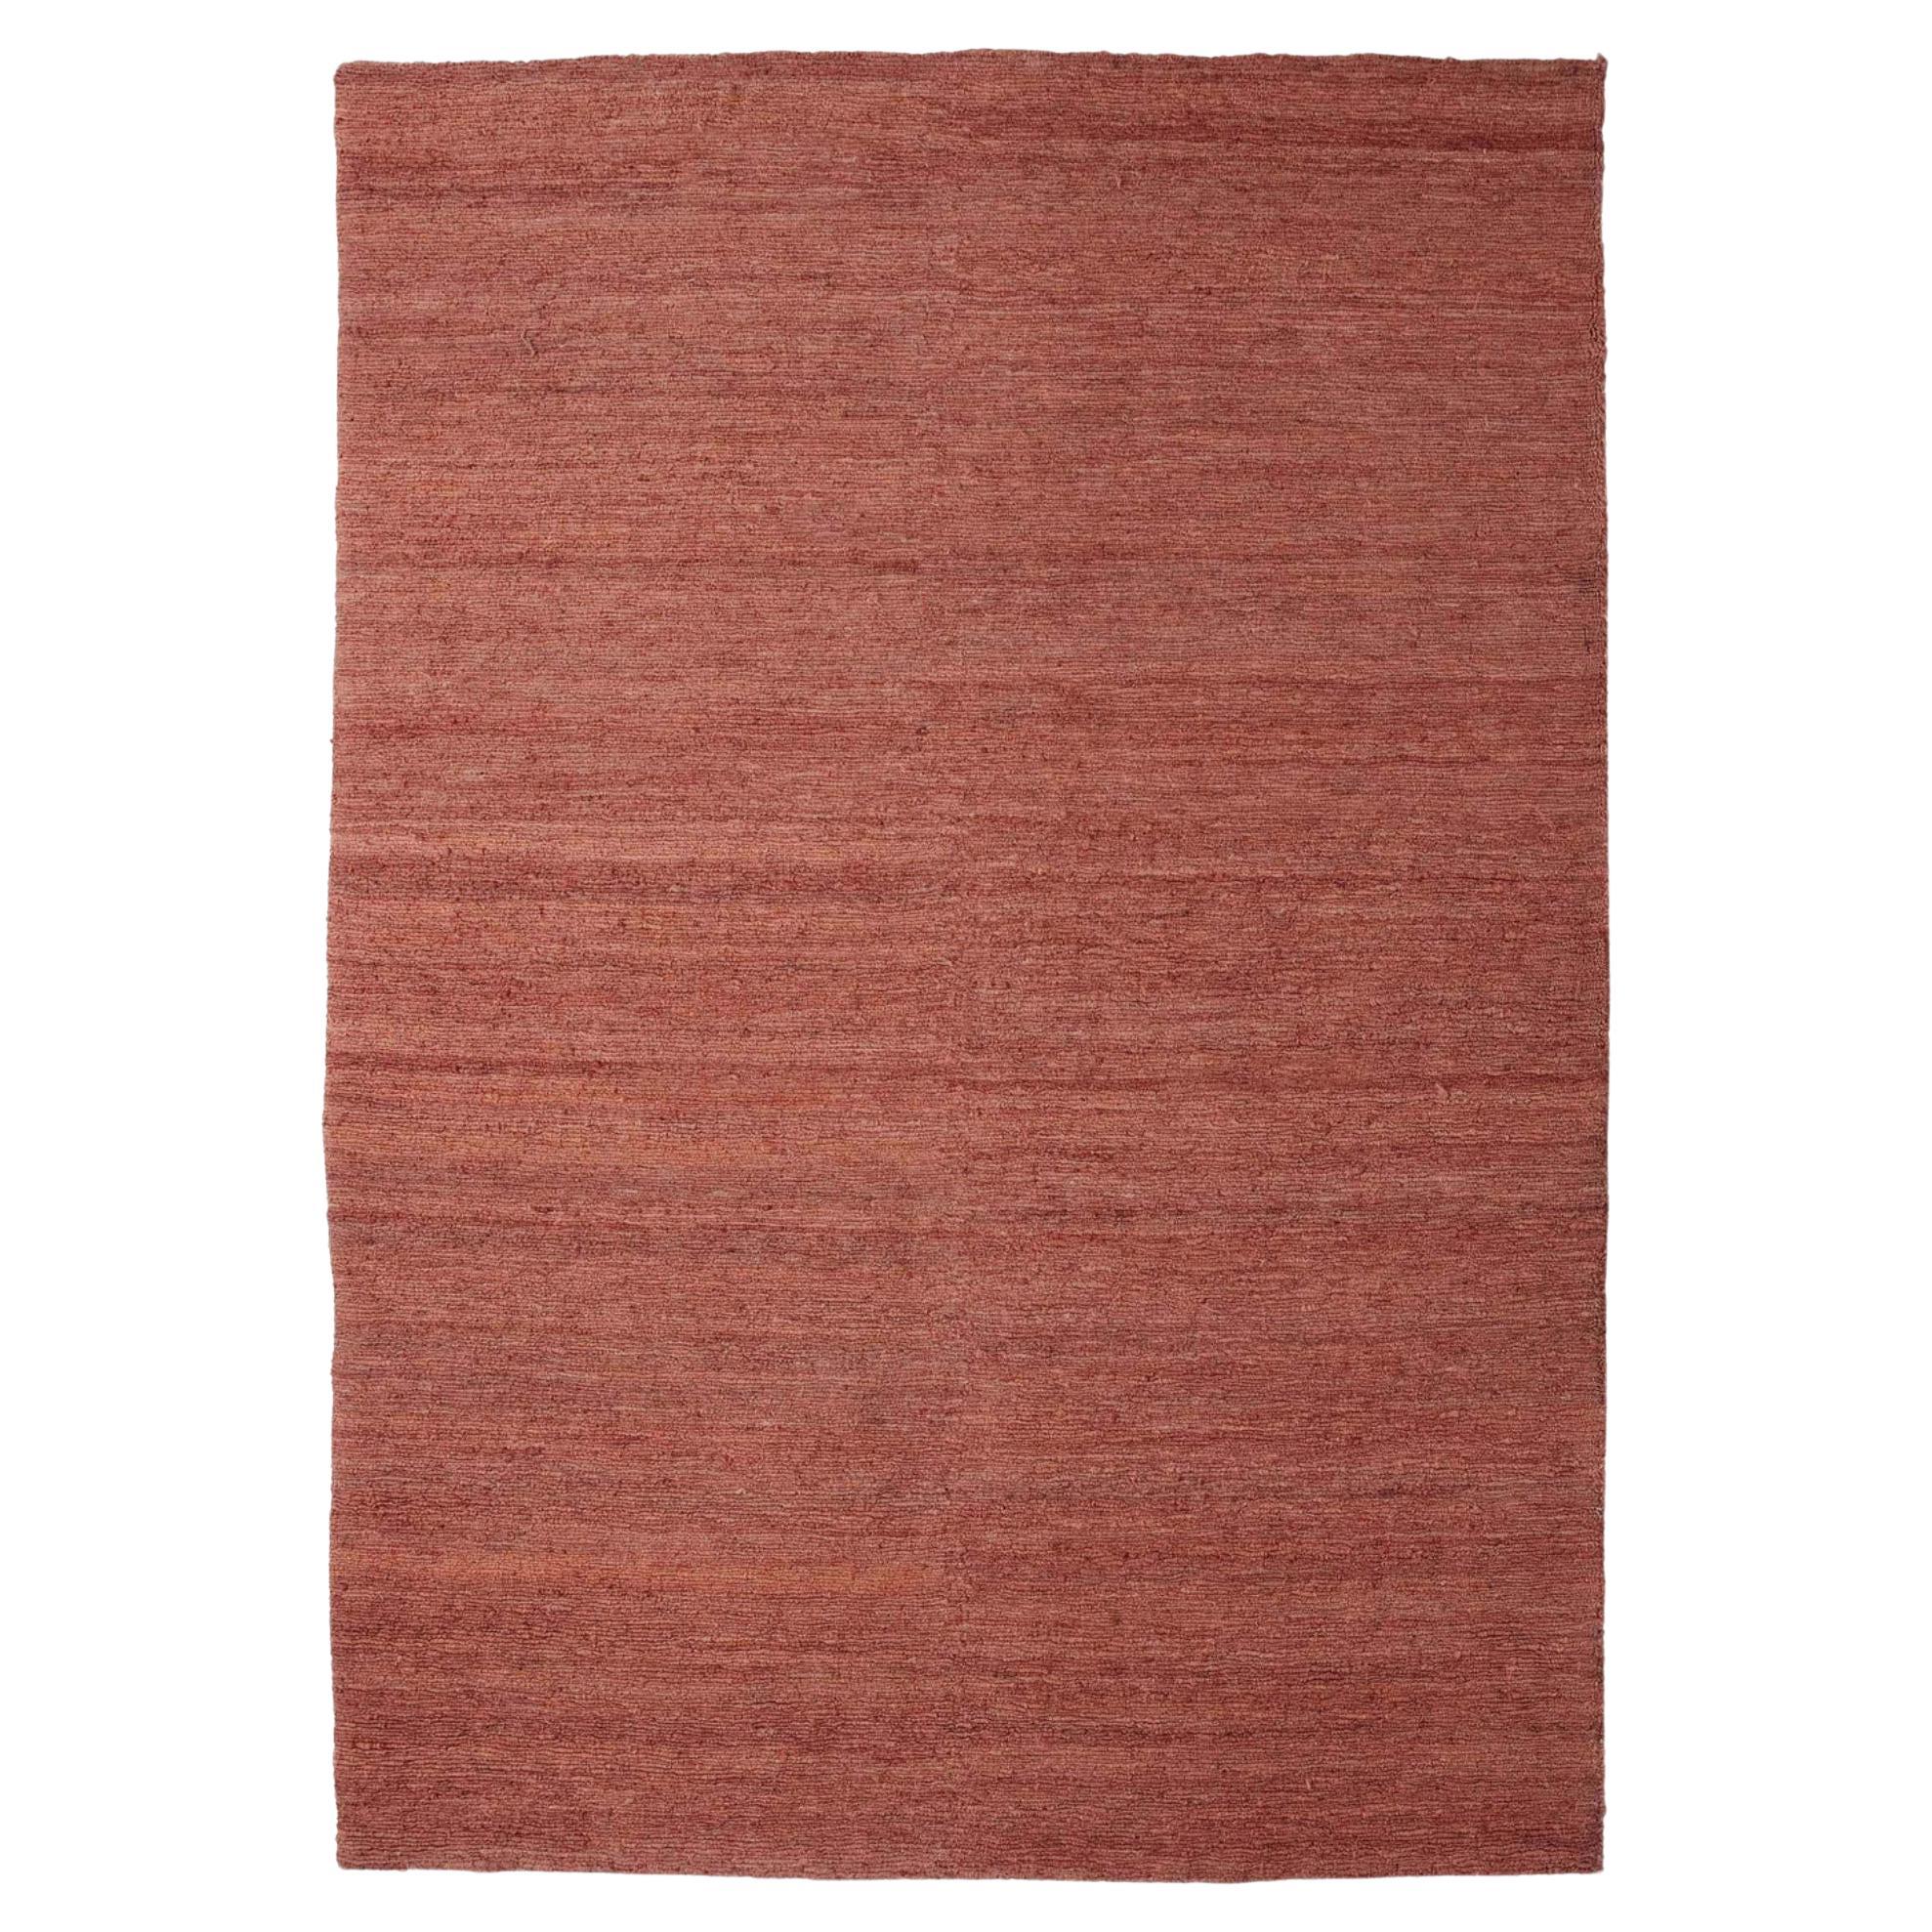 Nanimarquina „Earth“ Teppich aus handgesponnener Jute in „Terracotta“ 200x300cm